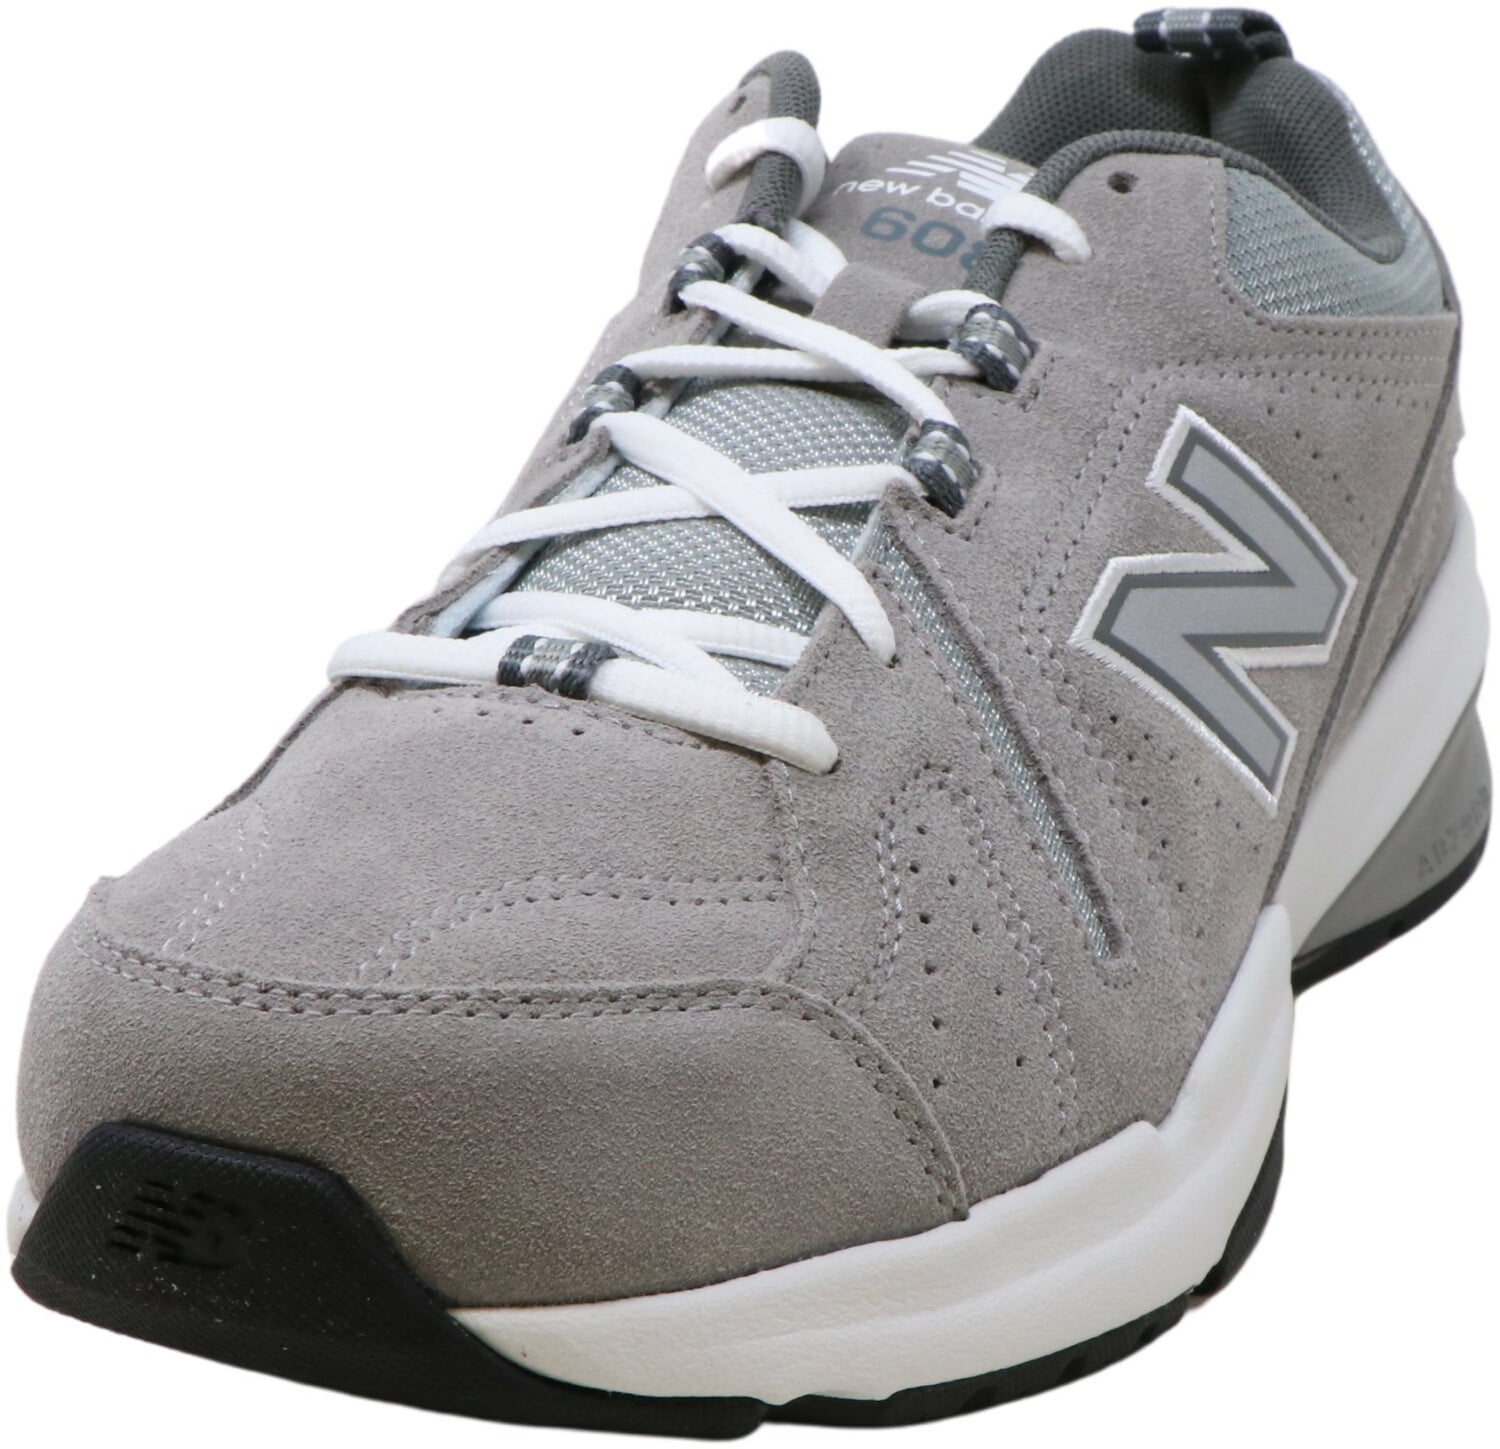 New Balance Mx608 Suede Running Shoe - 8M - Ug5 - Walmart.com